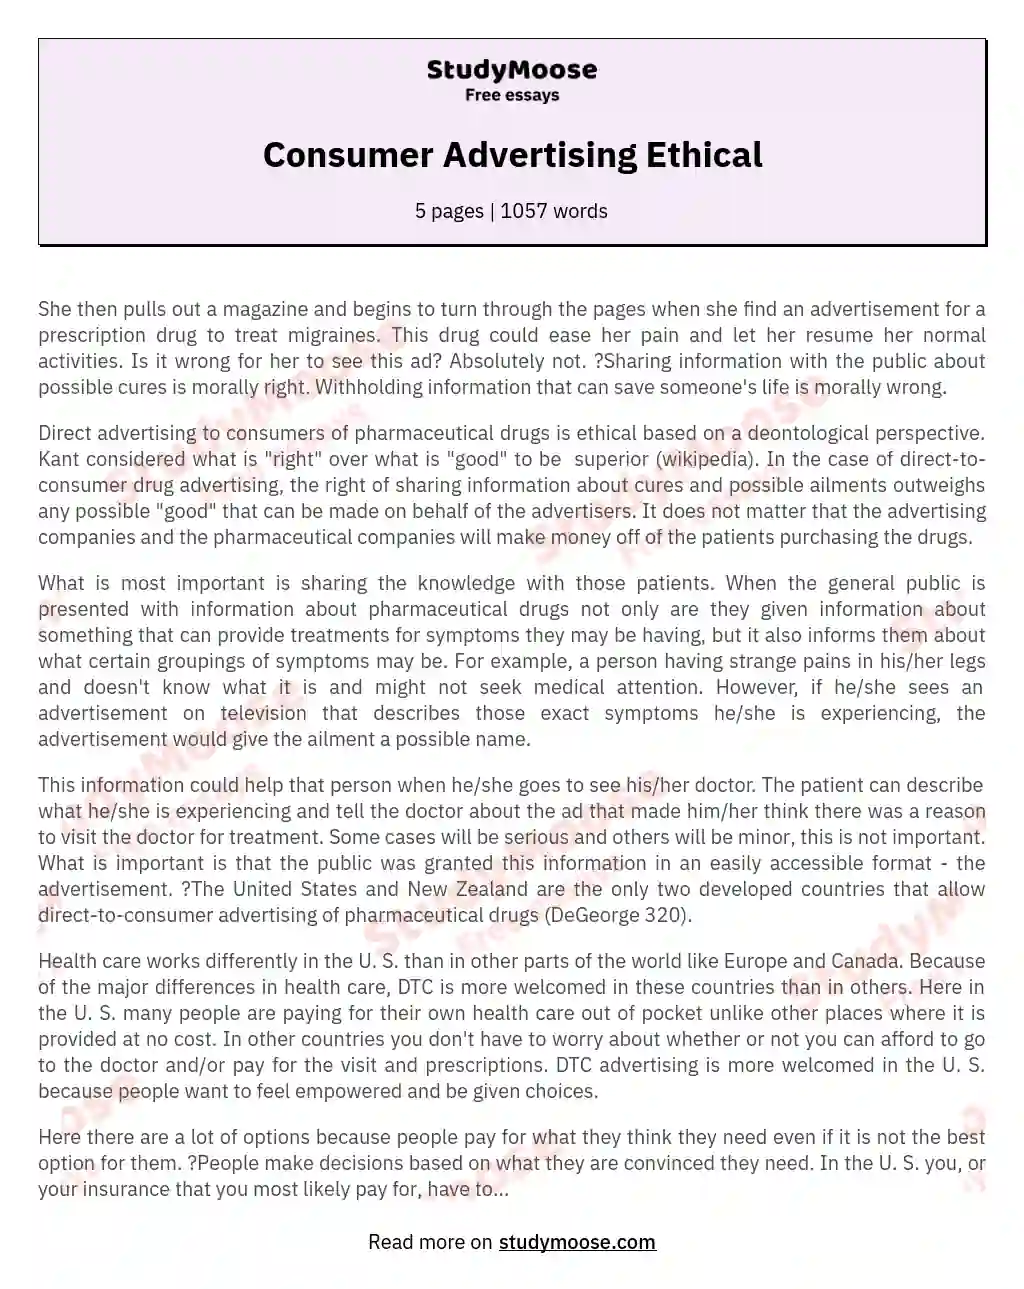 Consumer Advertising Ethical essay